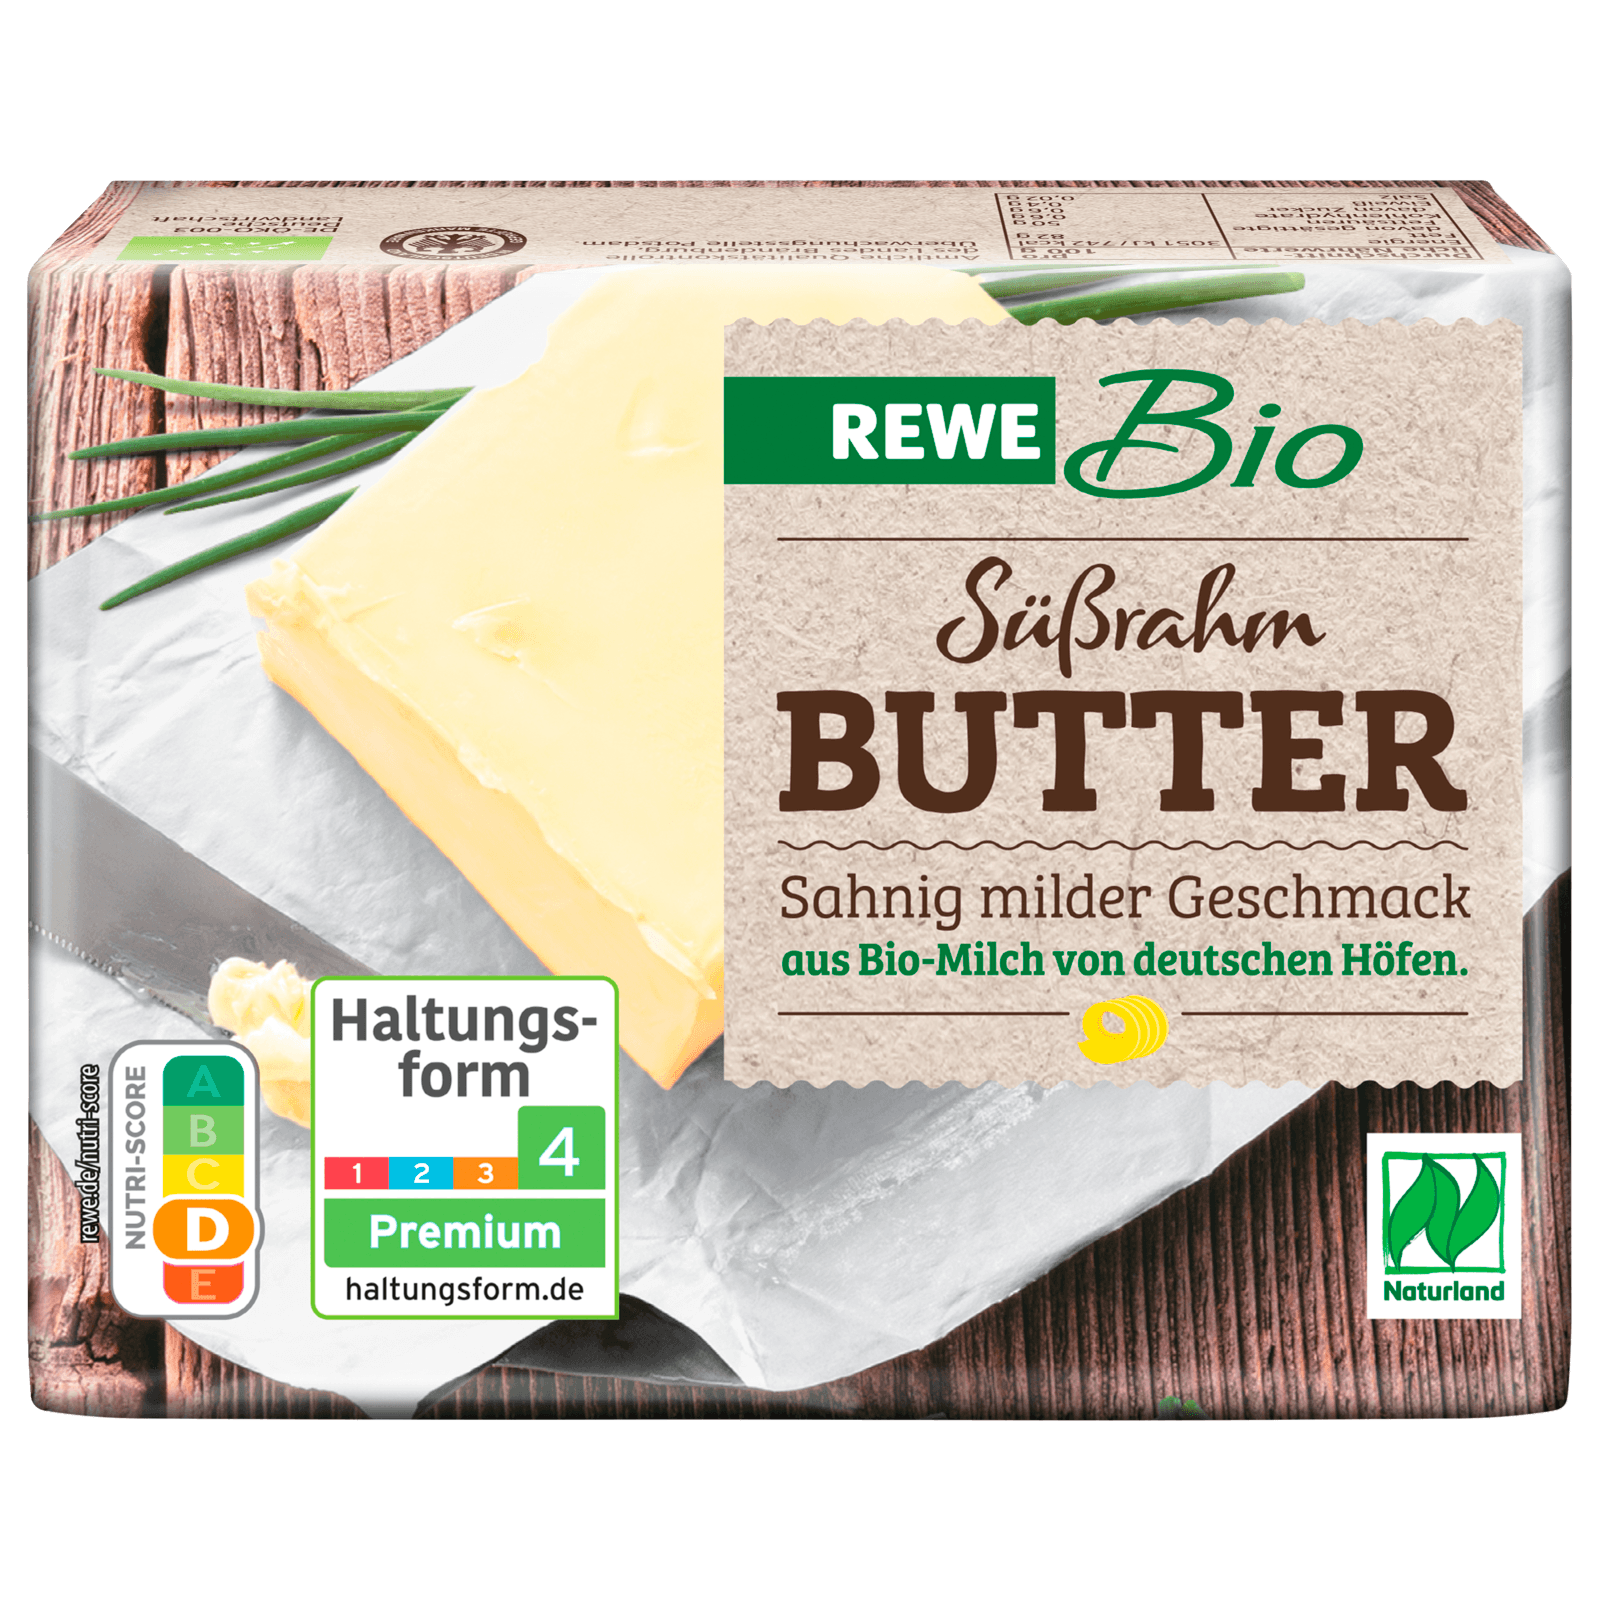 REWE Bio Süßrahmbutter 250g